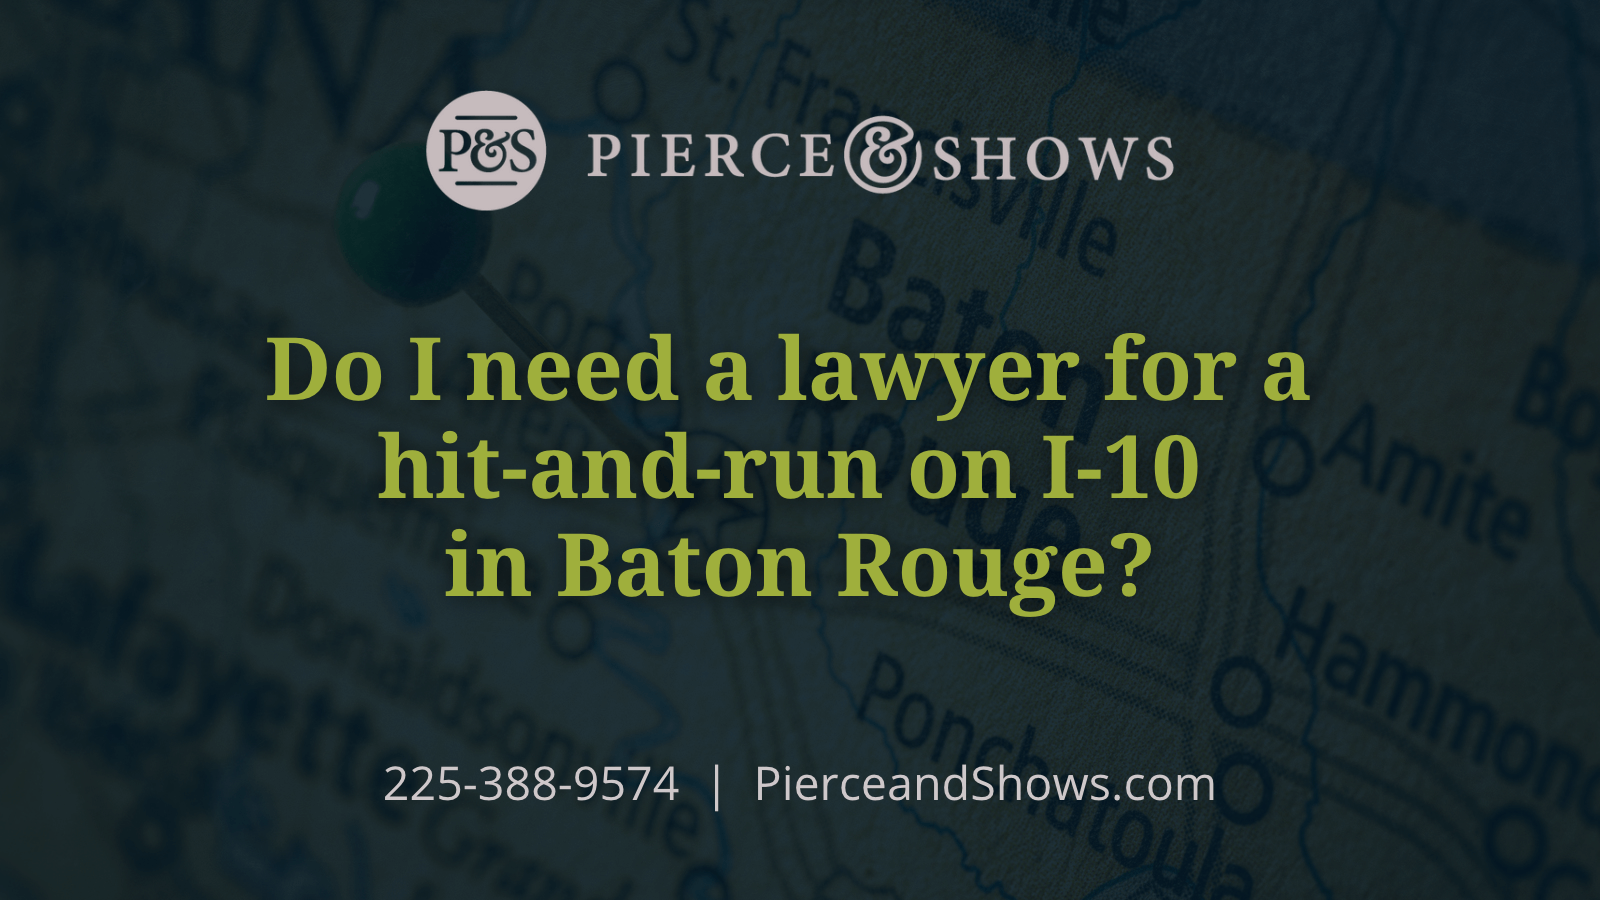 Do I need a lawyer for a hit-and-run on I-10 in Baton Rouge - Baton Rouge Louisiana injury attorney Pierce & Shows